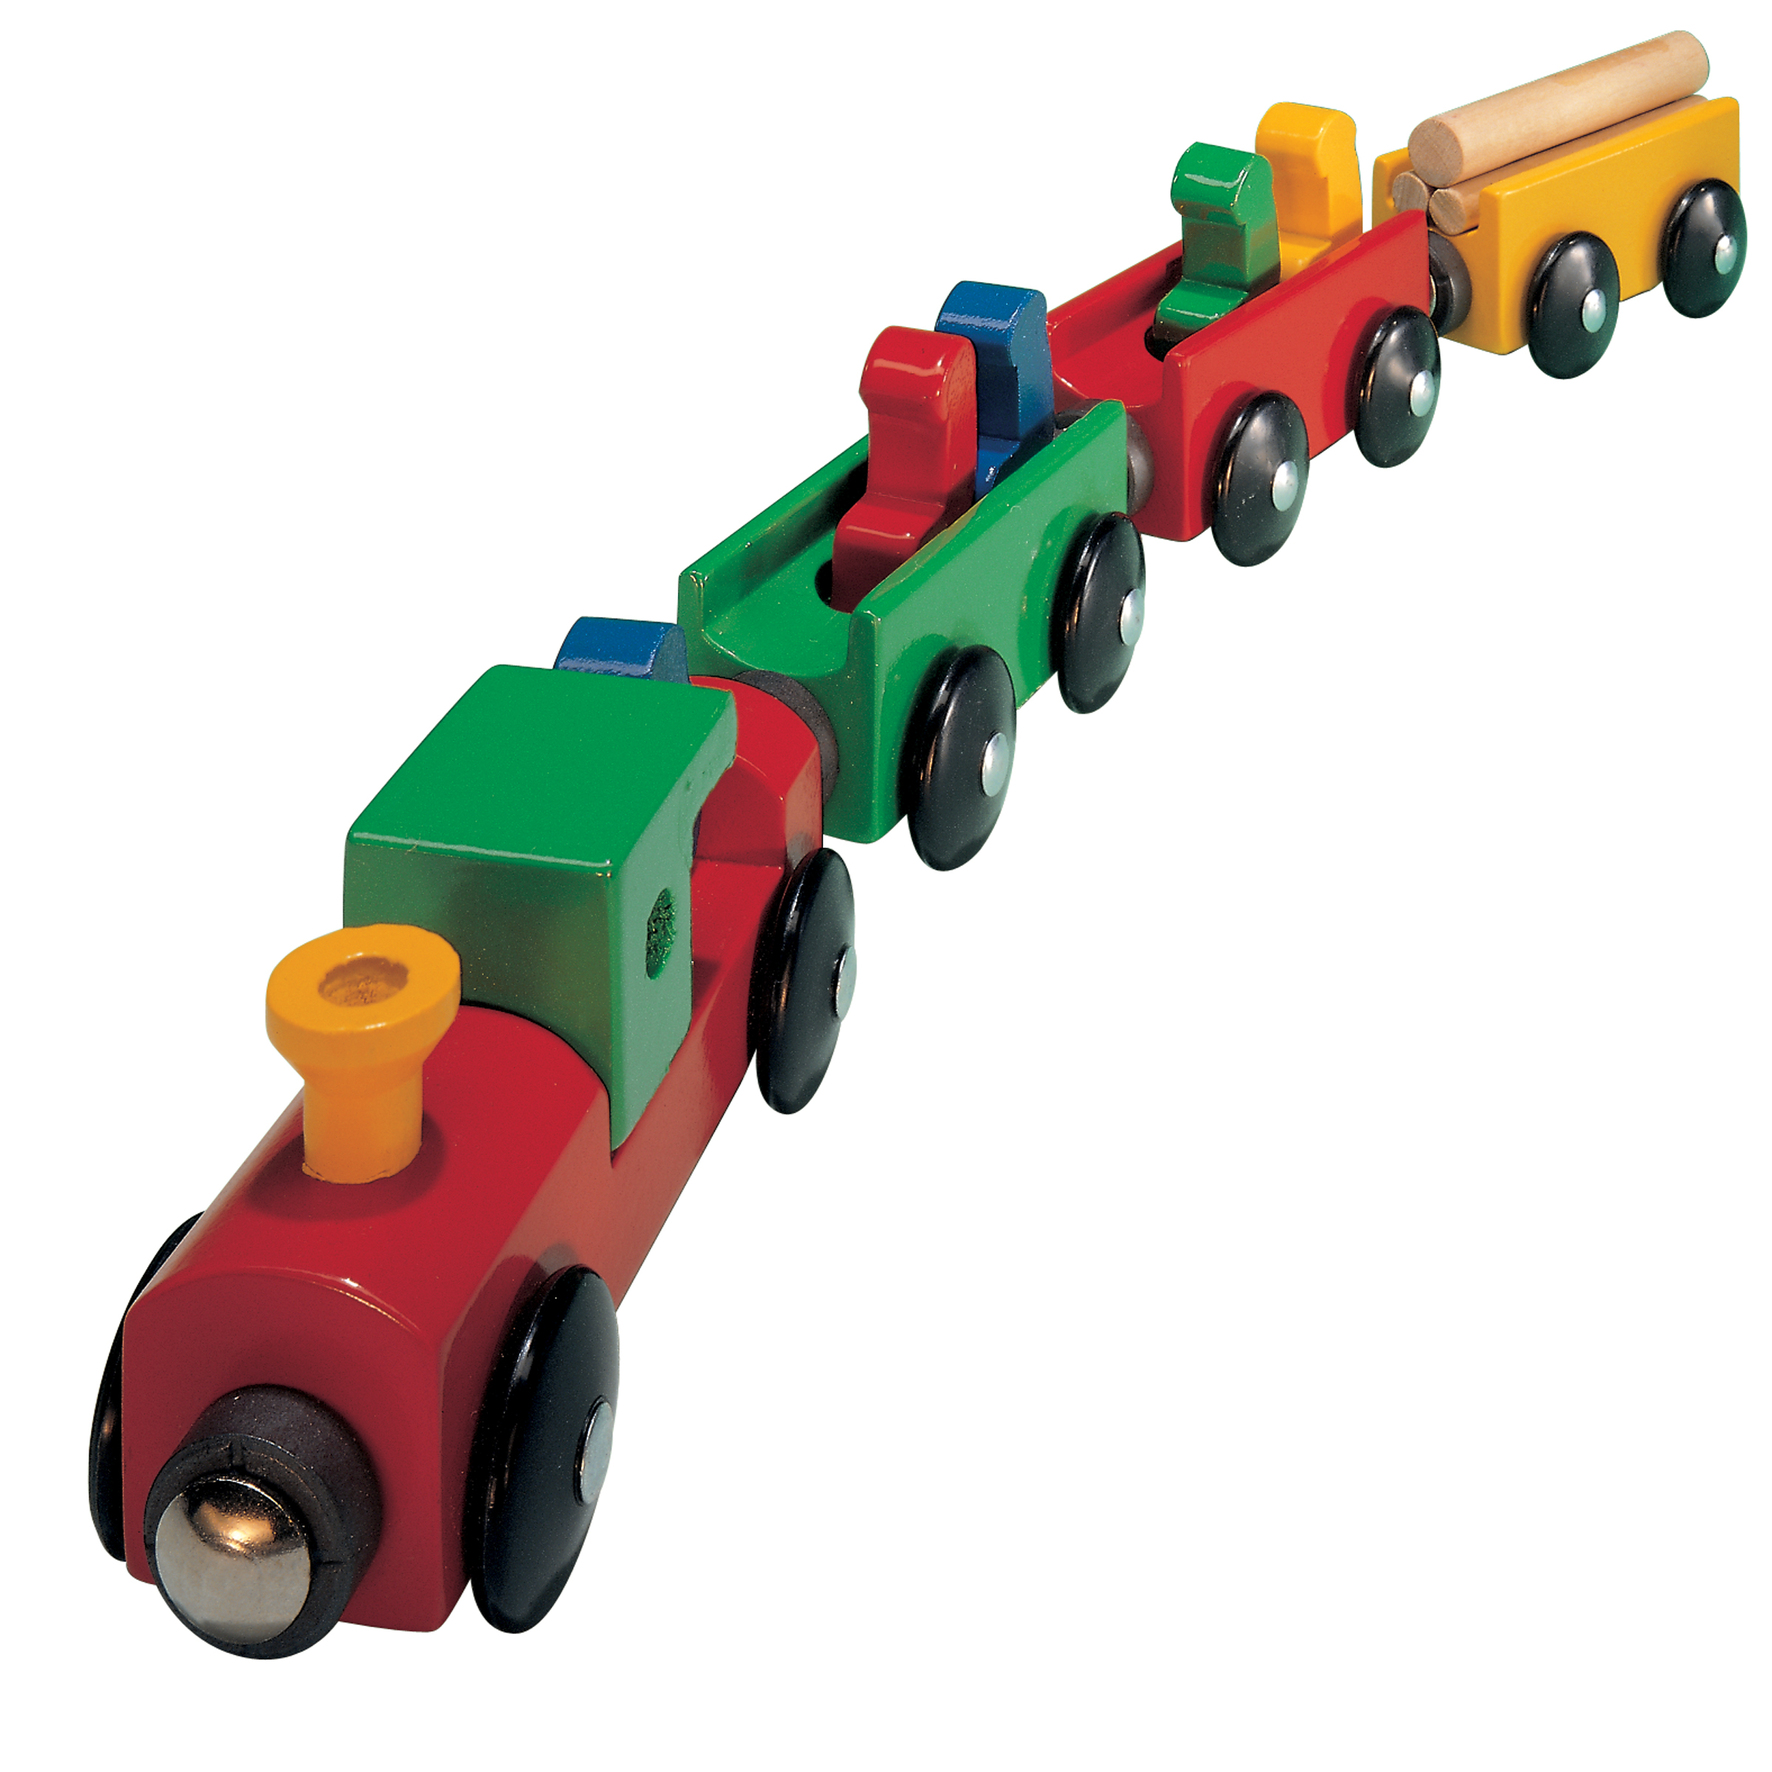 Holzspielzeug micki zugset personenzug holzen